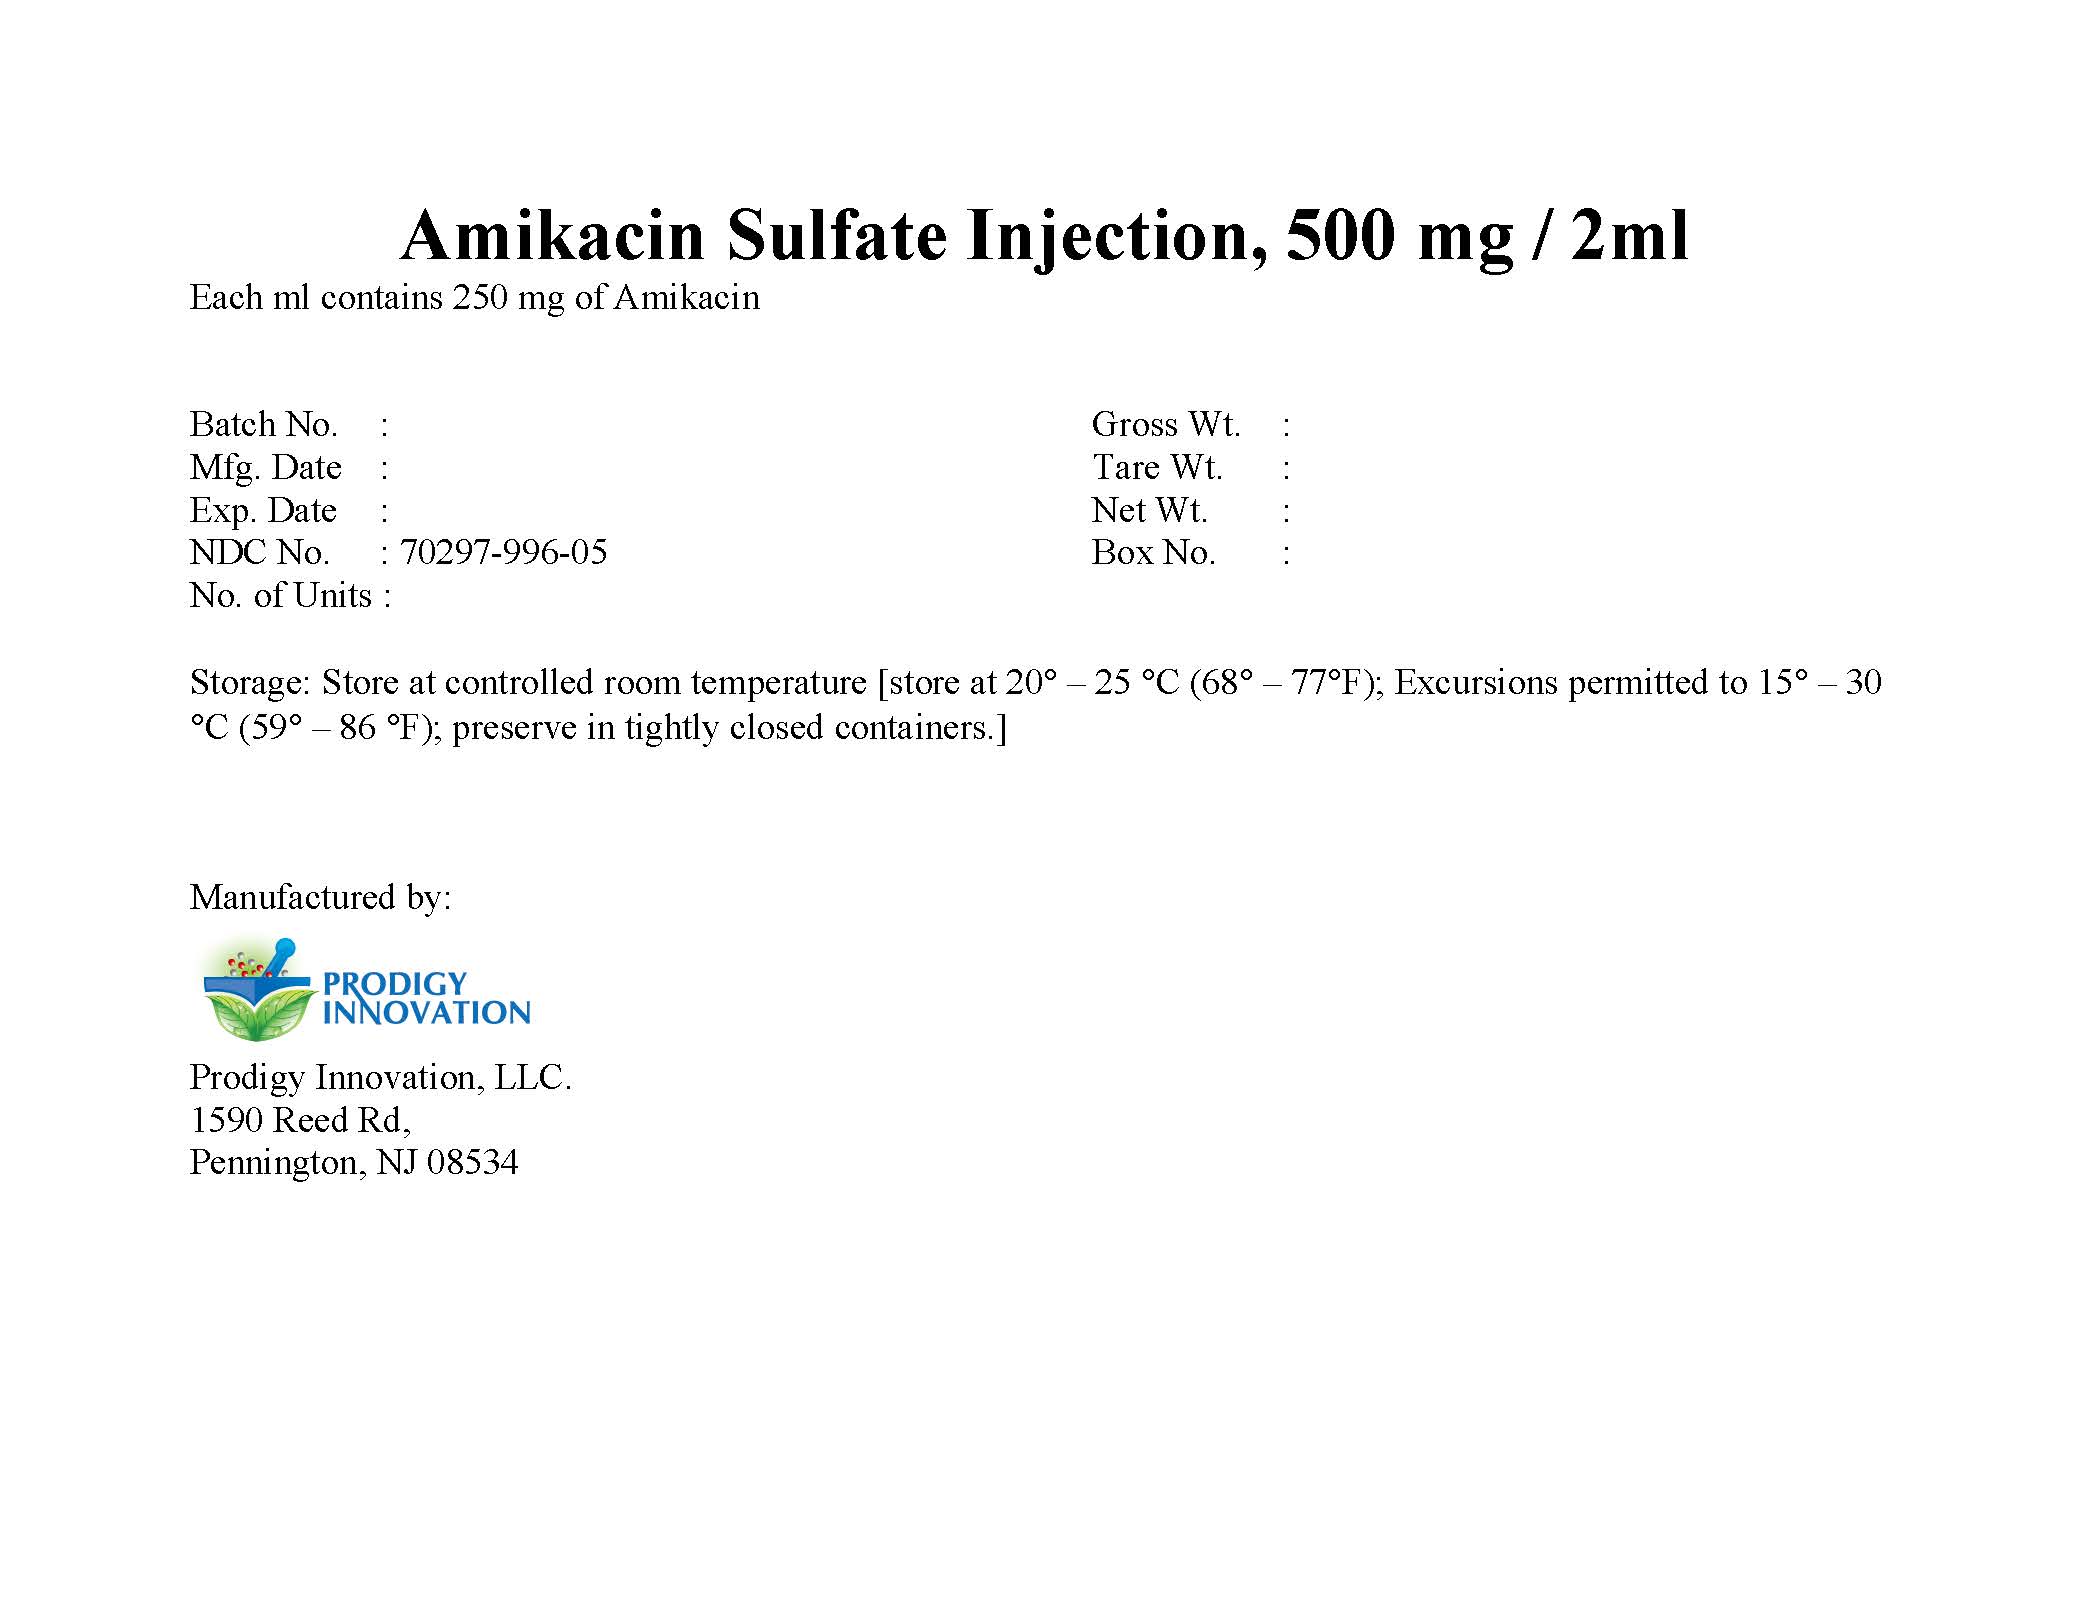 Amikacin Sulfate Injection, 500 Mg/2ml Injection Breastfeeding